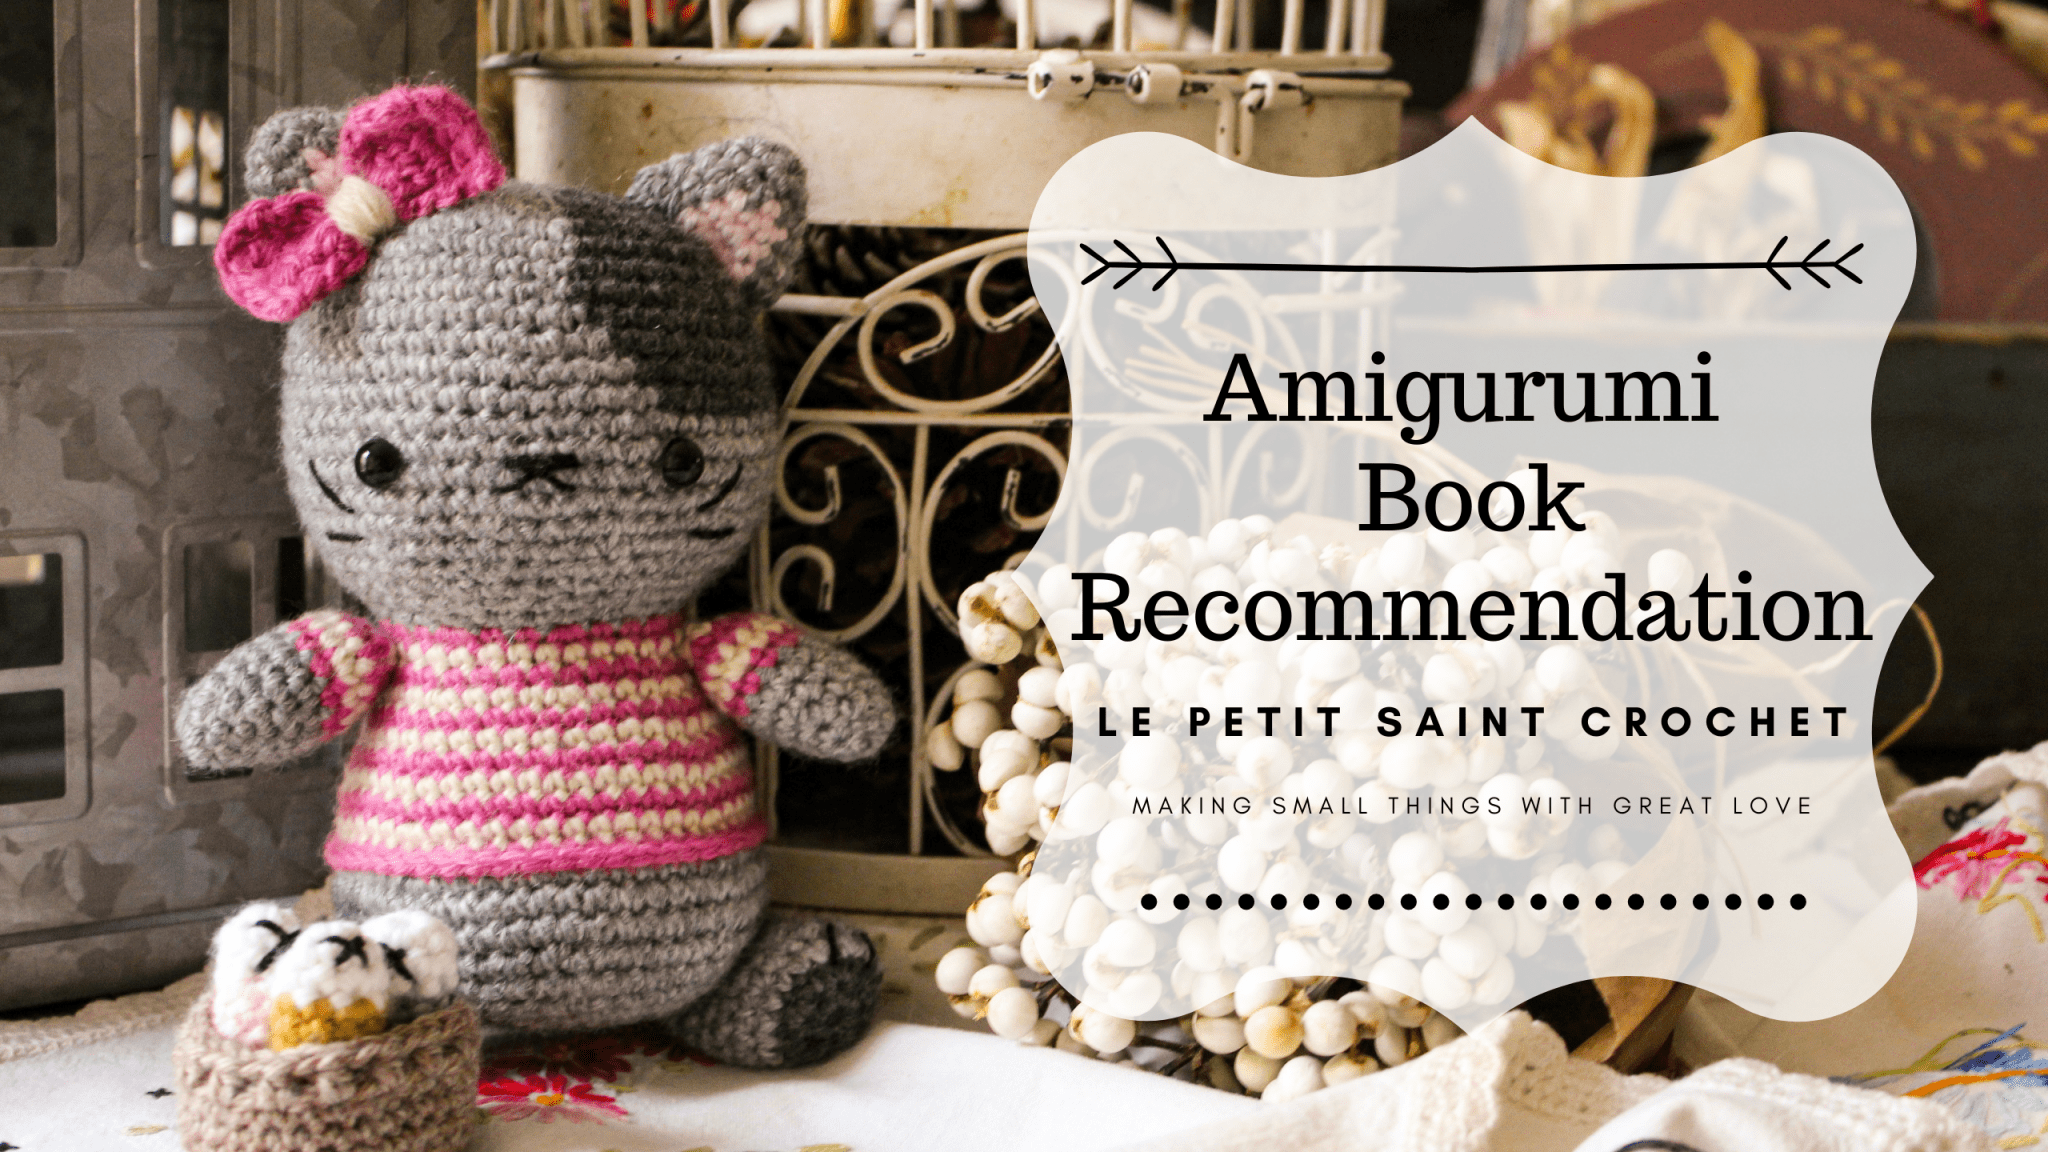 Amigurumi Book Recommendation - Elise Rose Crochet